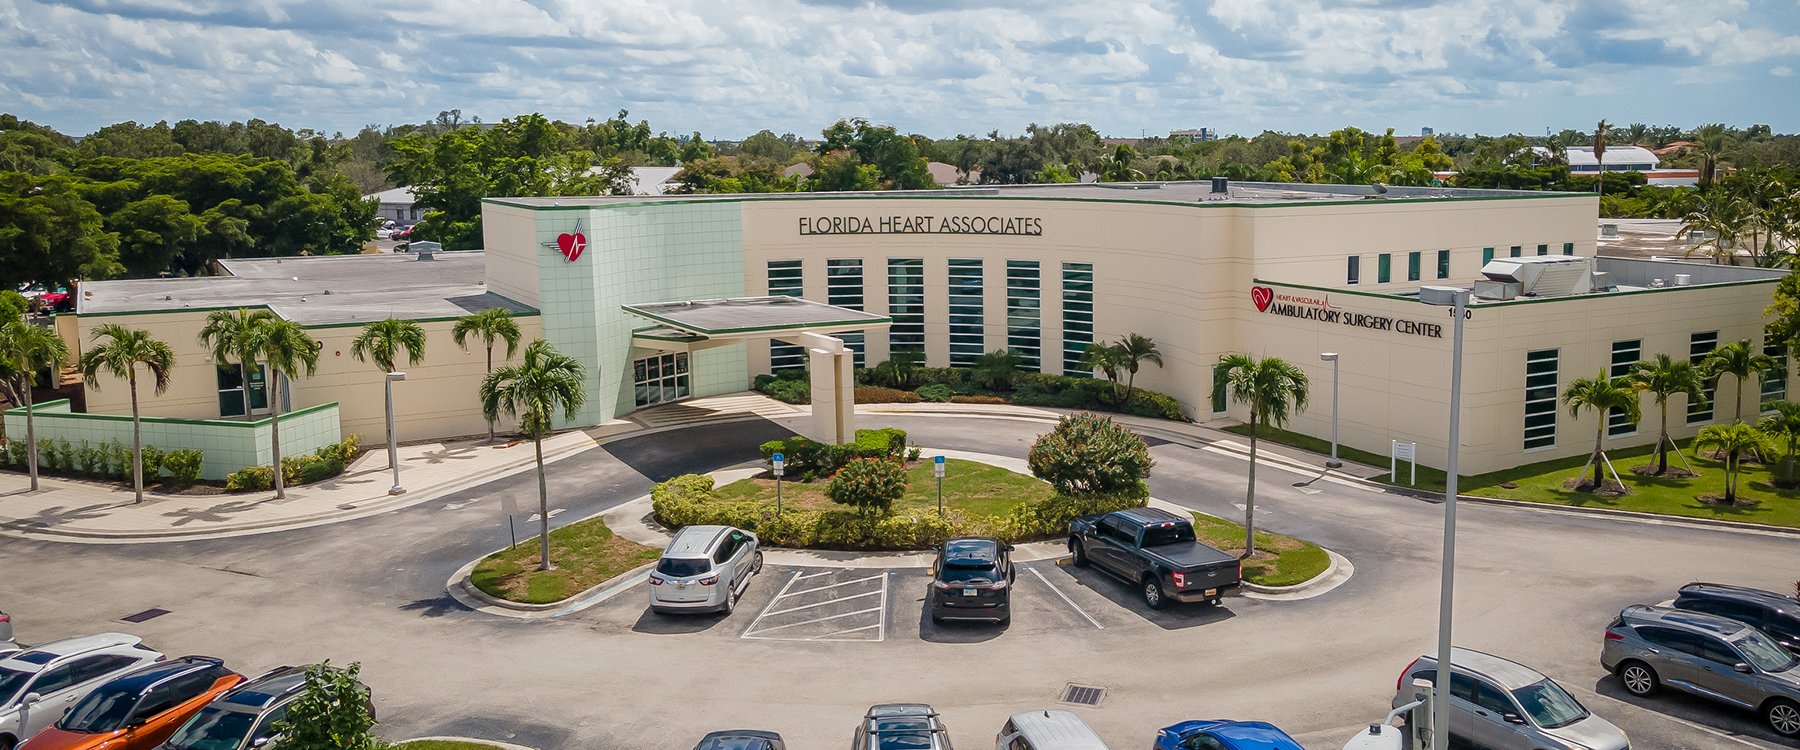 Florida Heart Associates Exterior Drone Shot